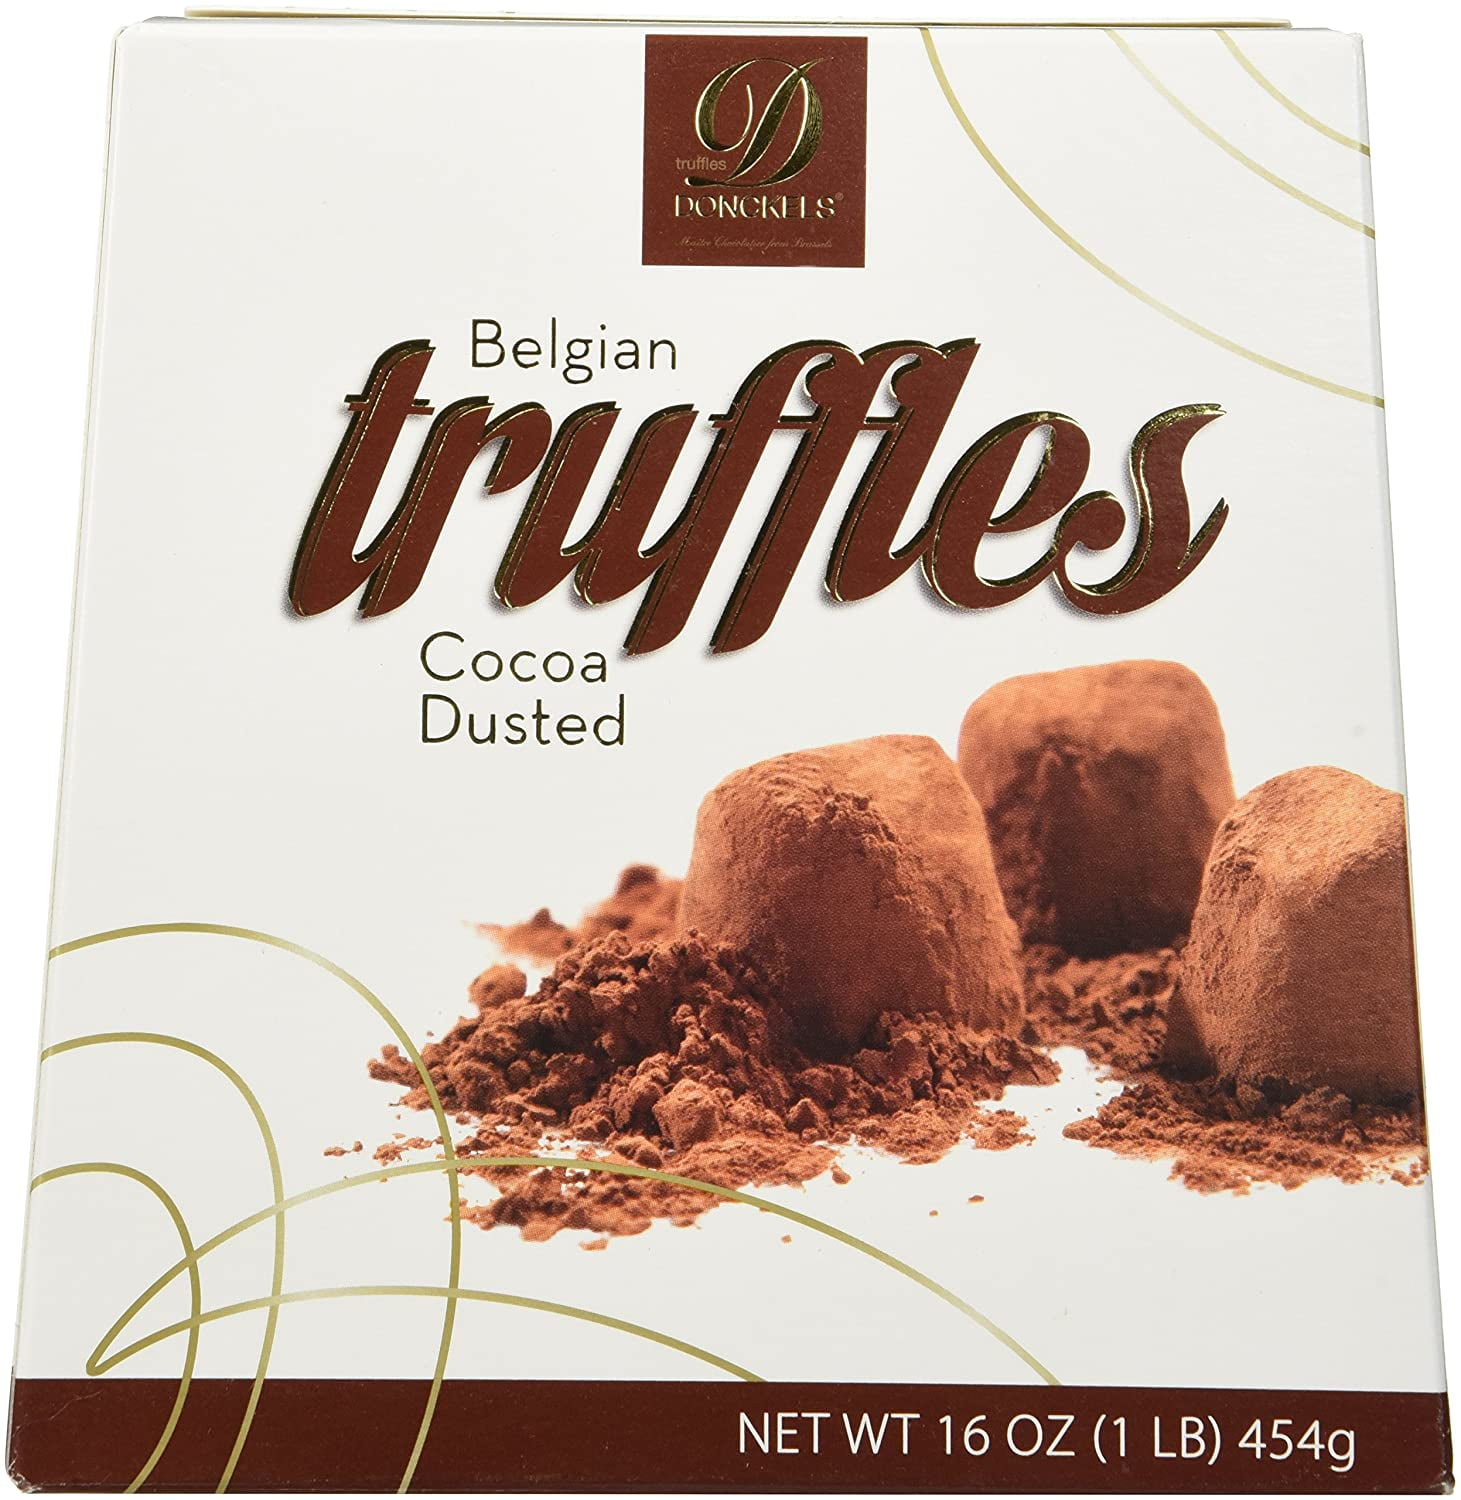 Pure Belgian Dark & Milk Chocolate Truffles Assortment Gift Box,  Tрюфеля 600g LV